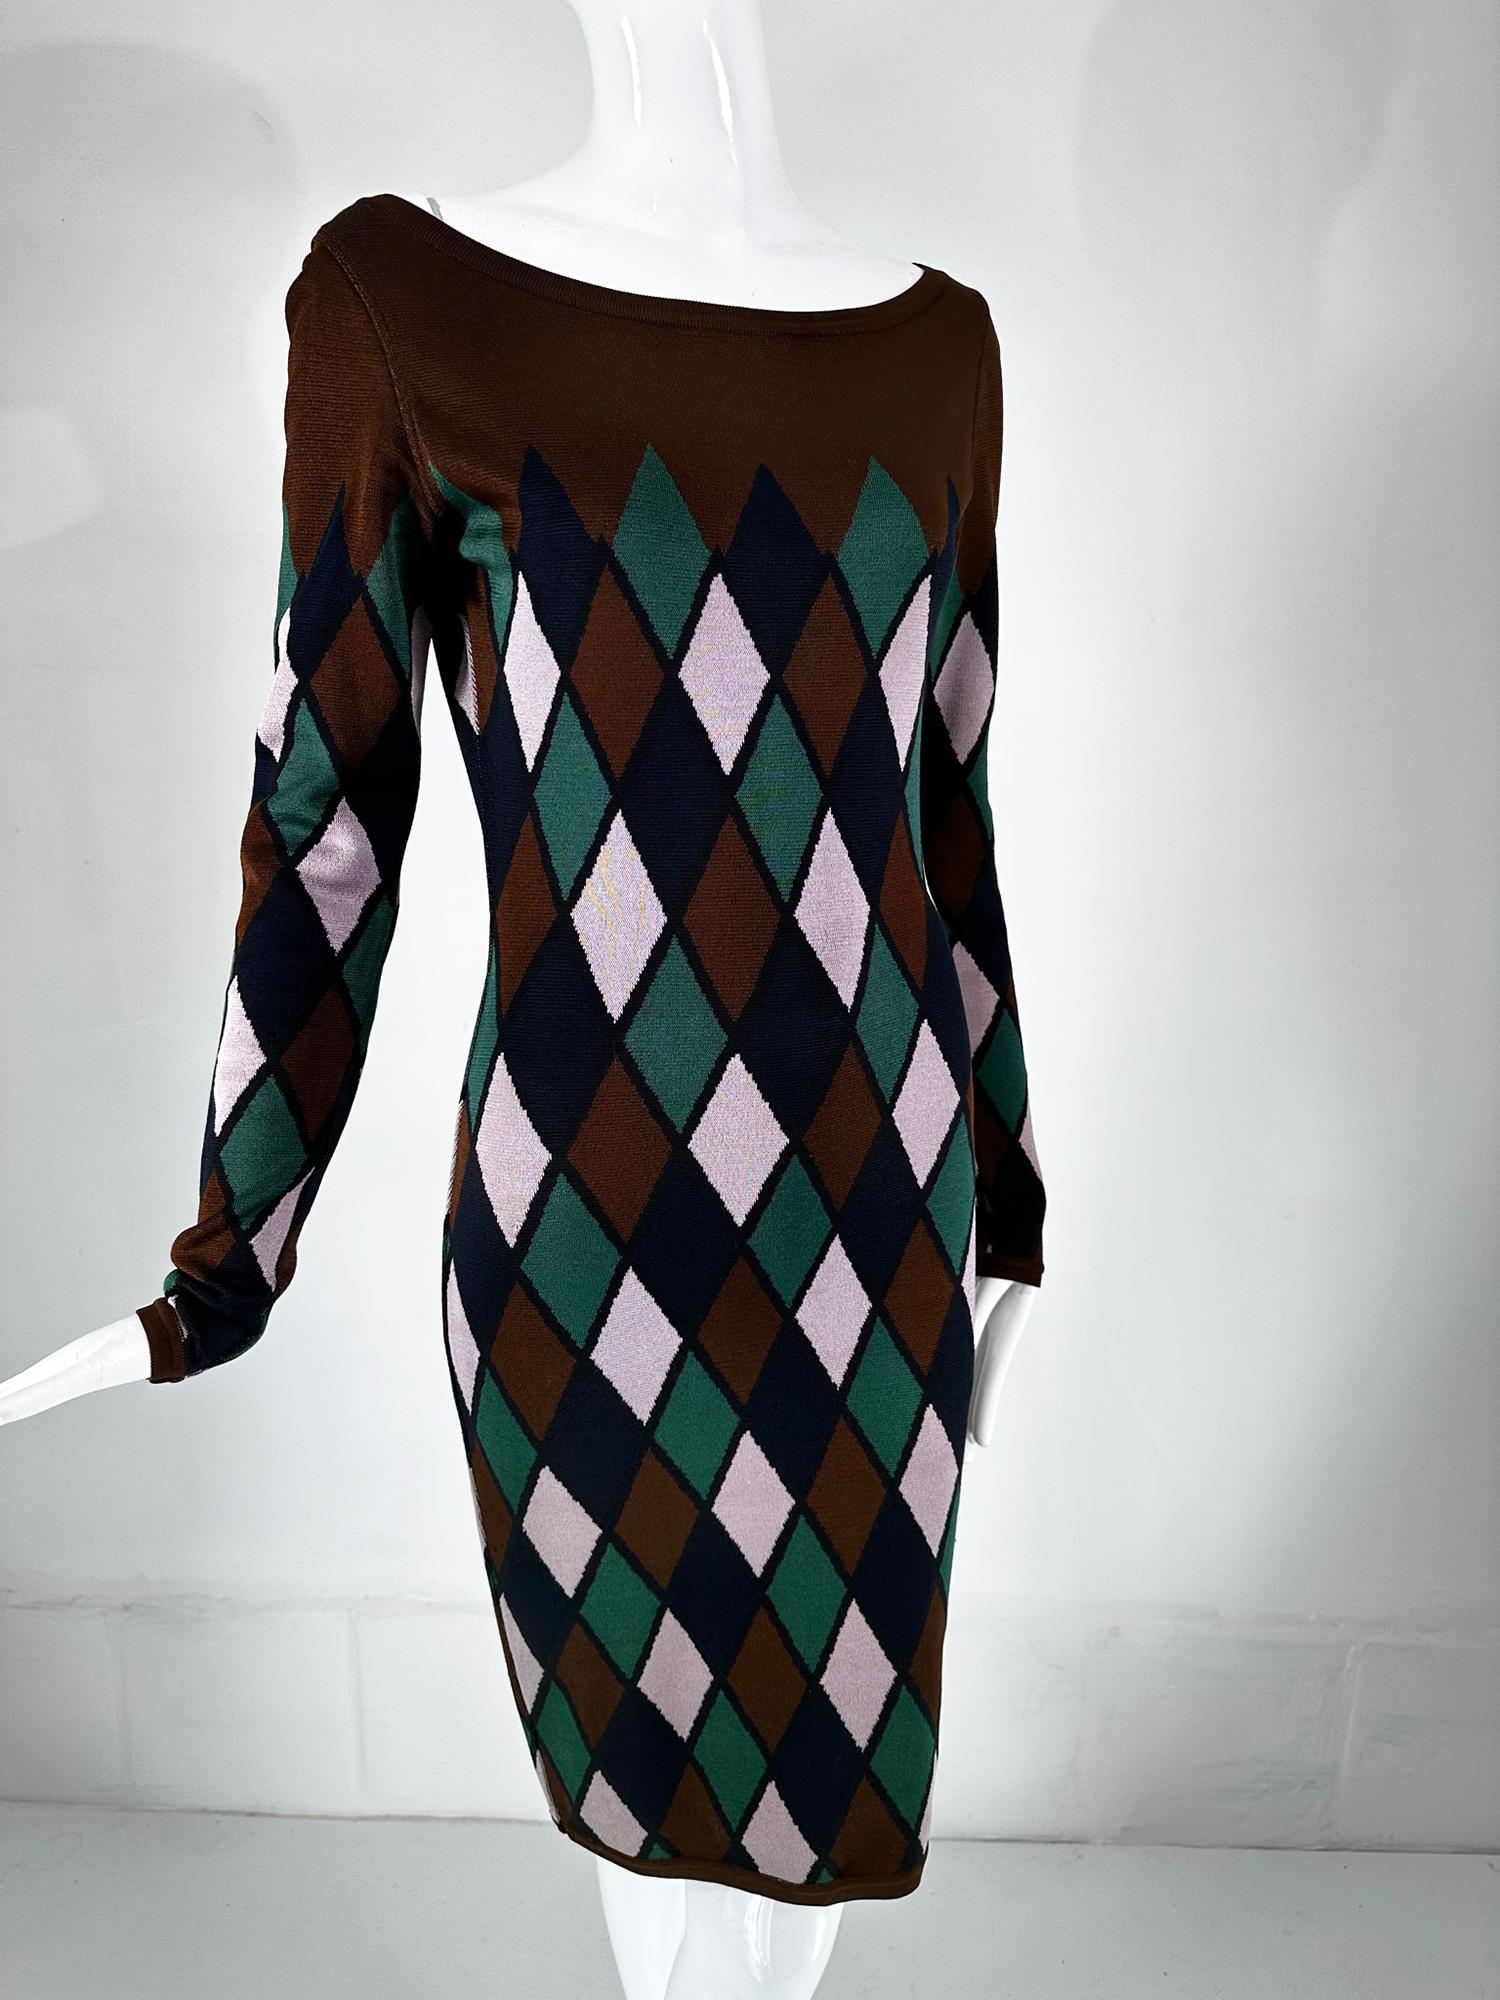 Azzedine Alaia Rare Fall 1992 Brown & Green Argyle Knit Body Con Dress Medium For Sale 7